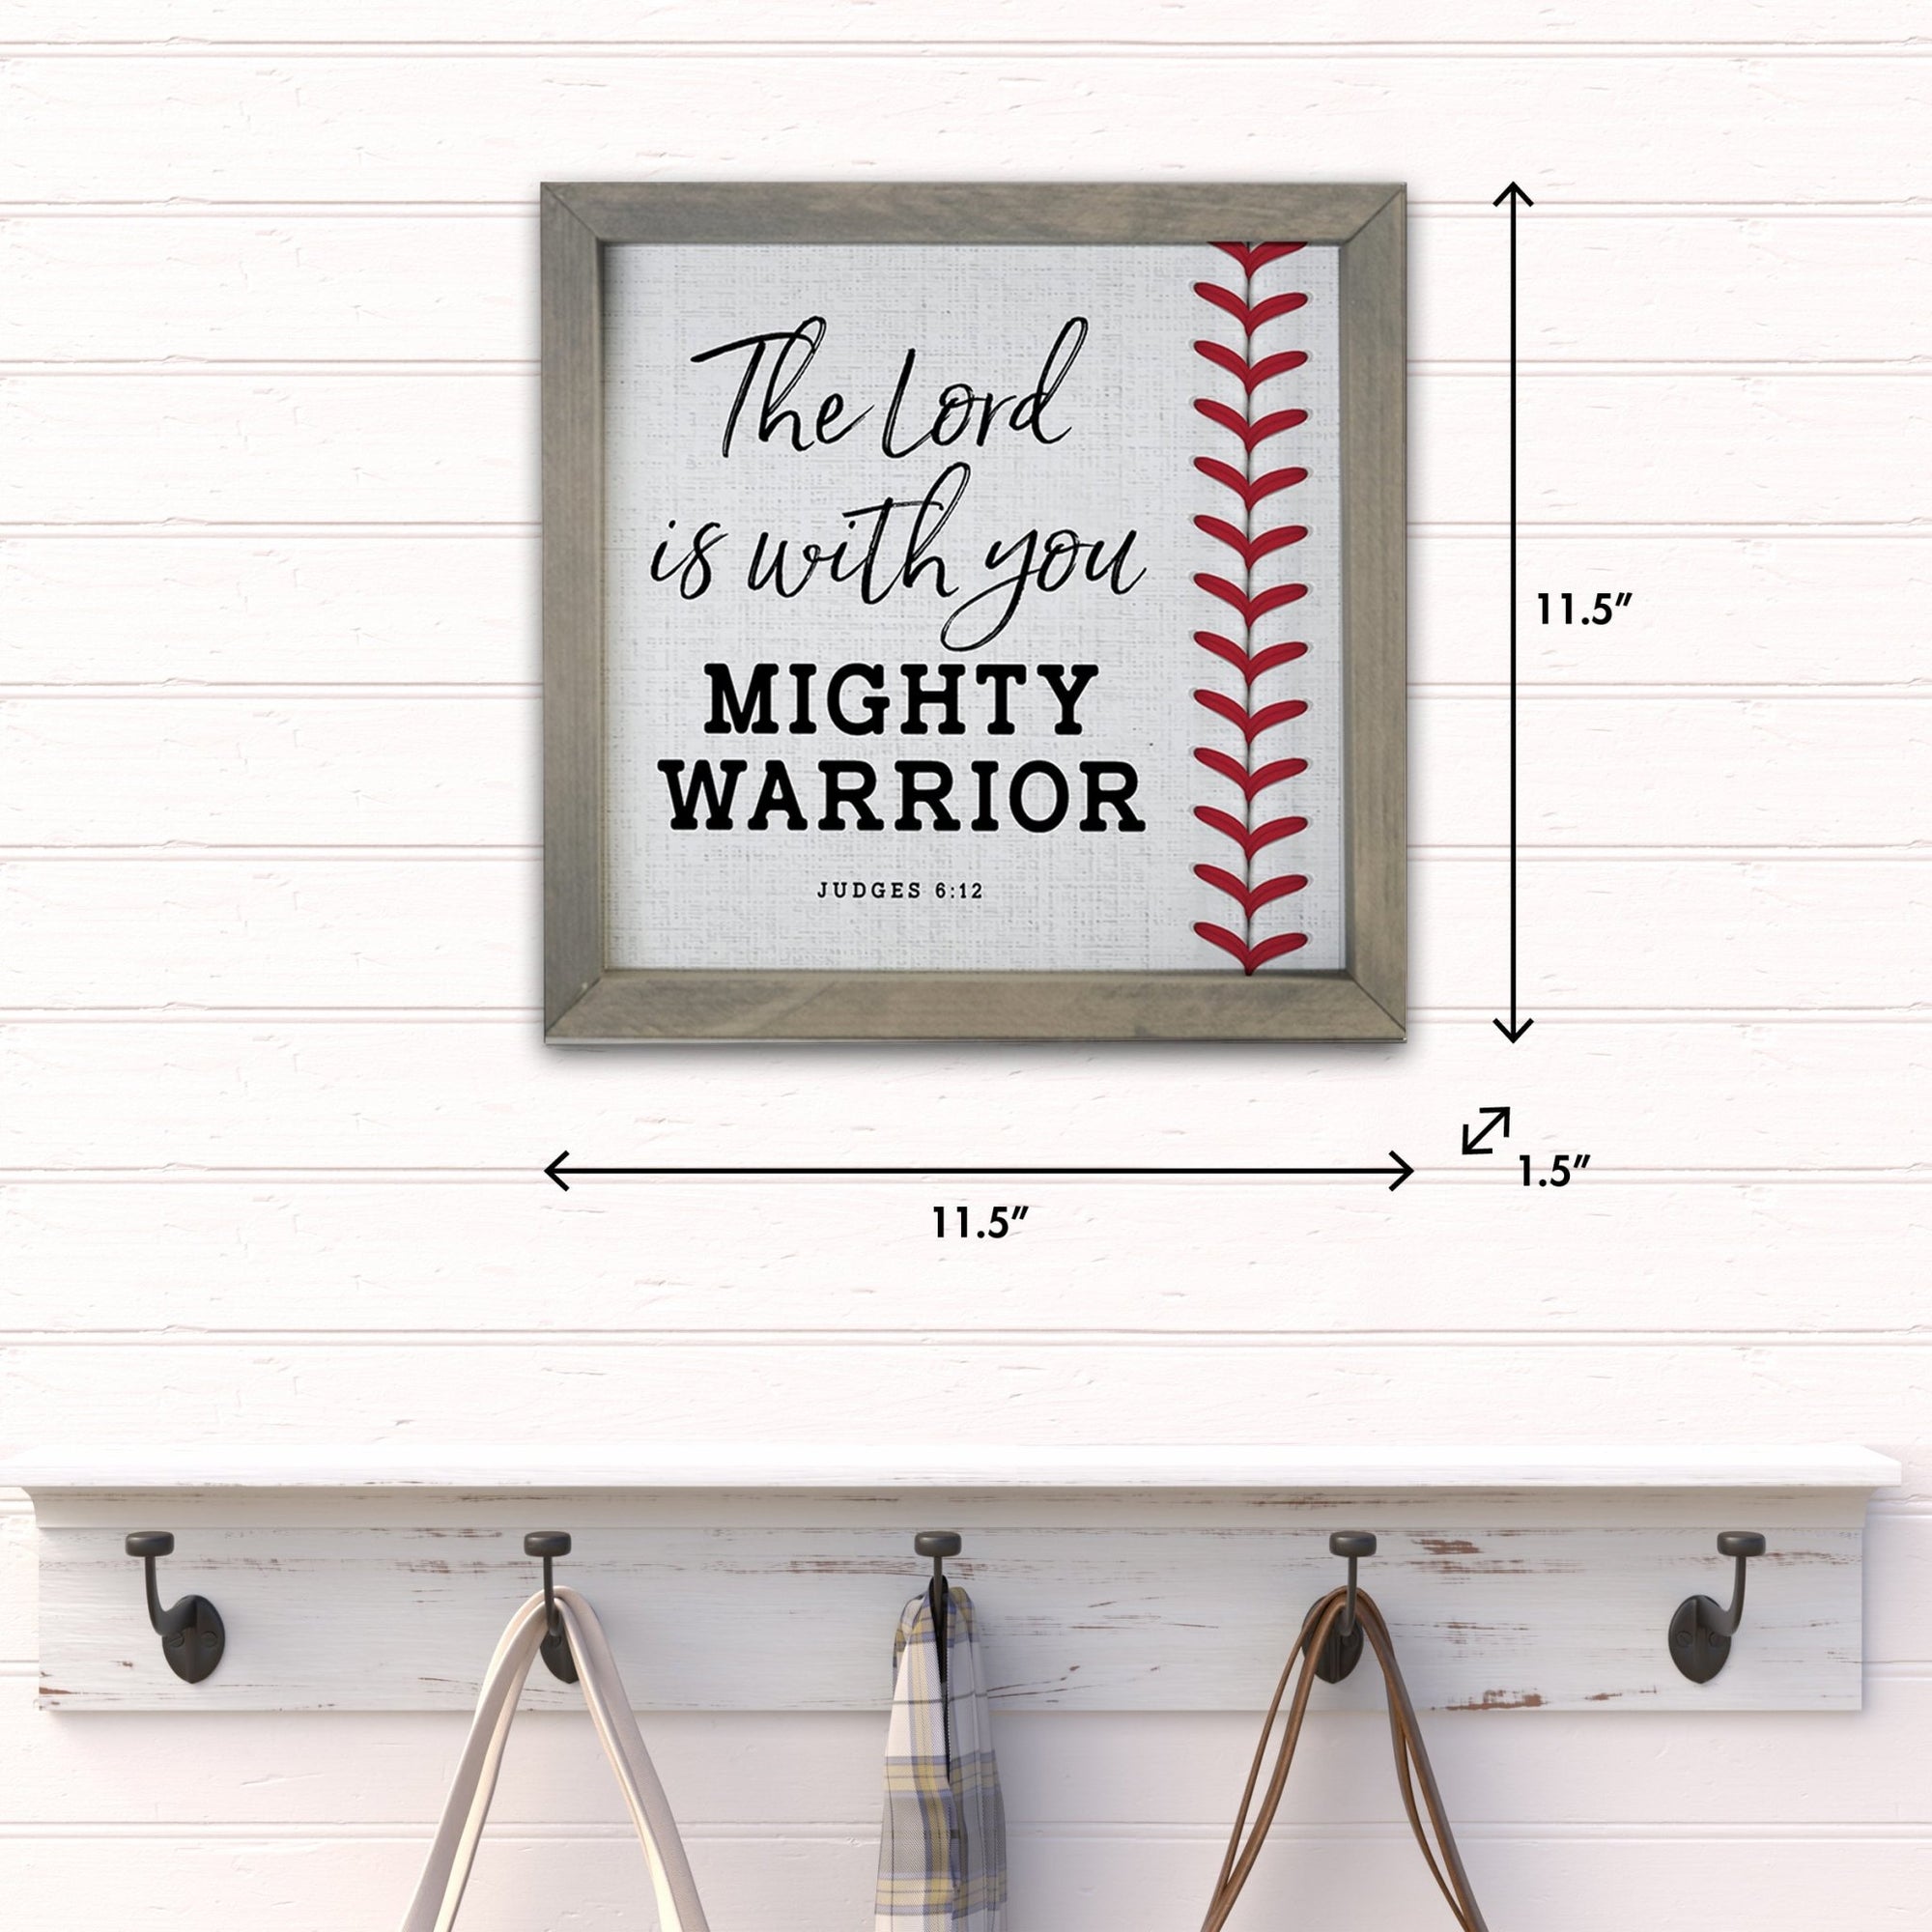 Elegant Baseball Framed Shadow Box Shelf Décor With Inspiring Bible Verses - Mighty Warrior - LifeSong Milestones